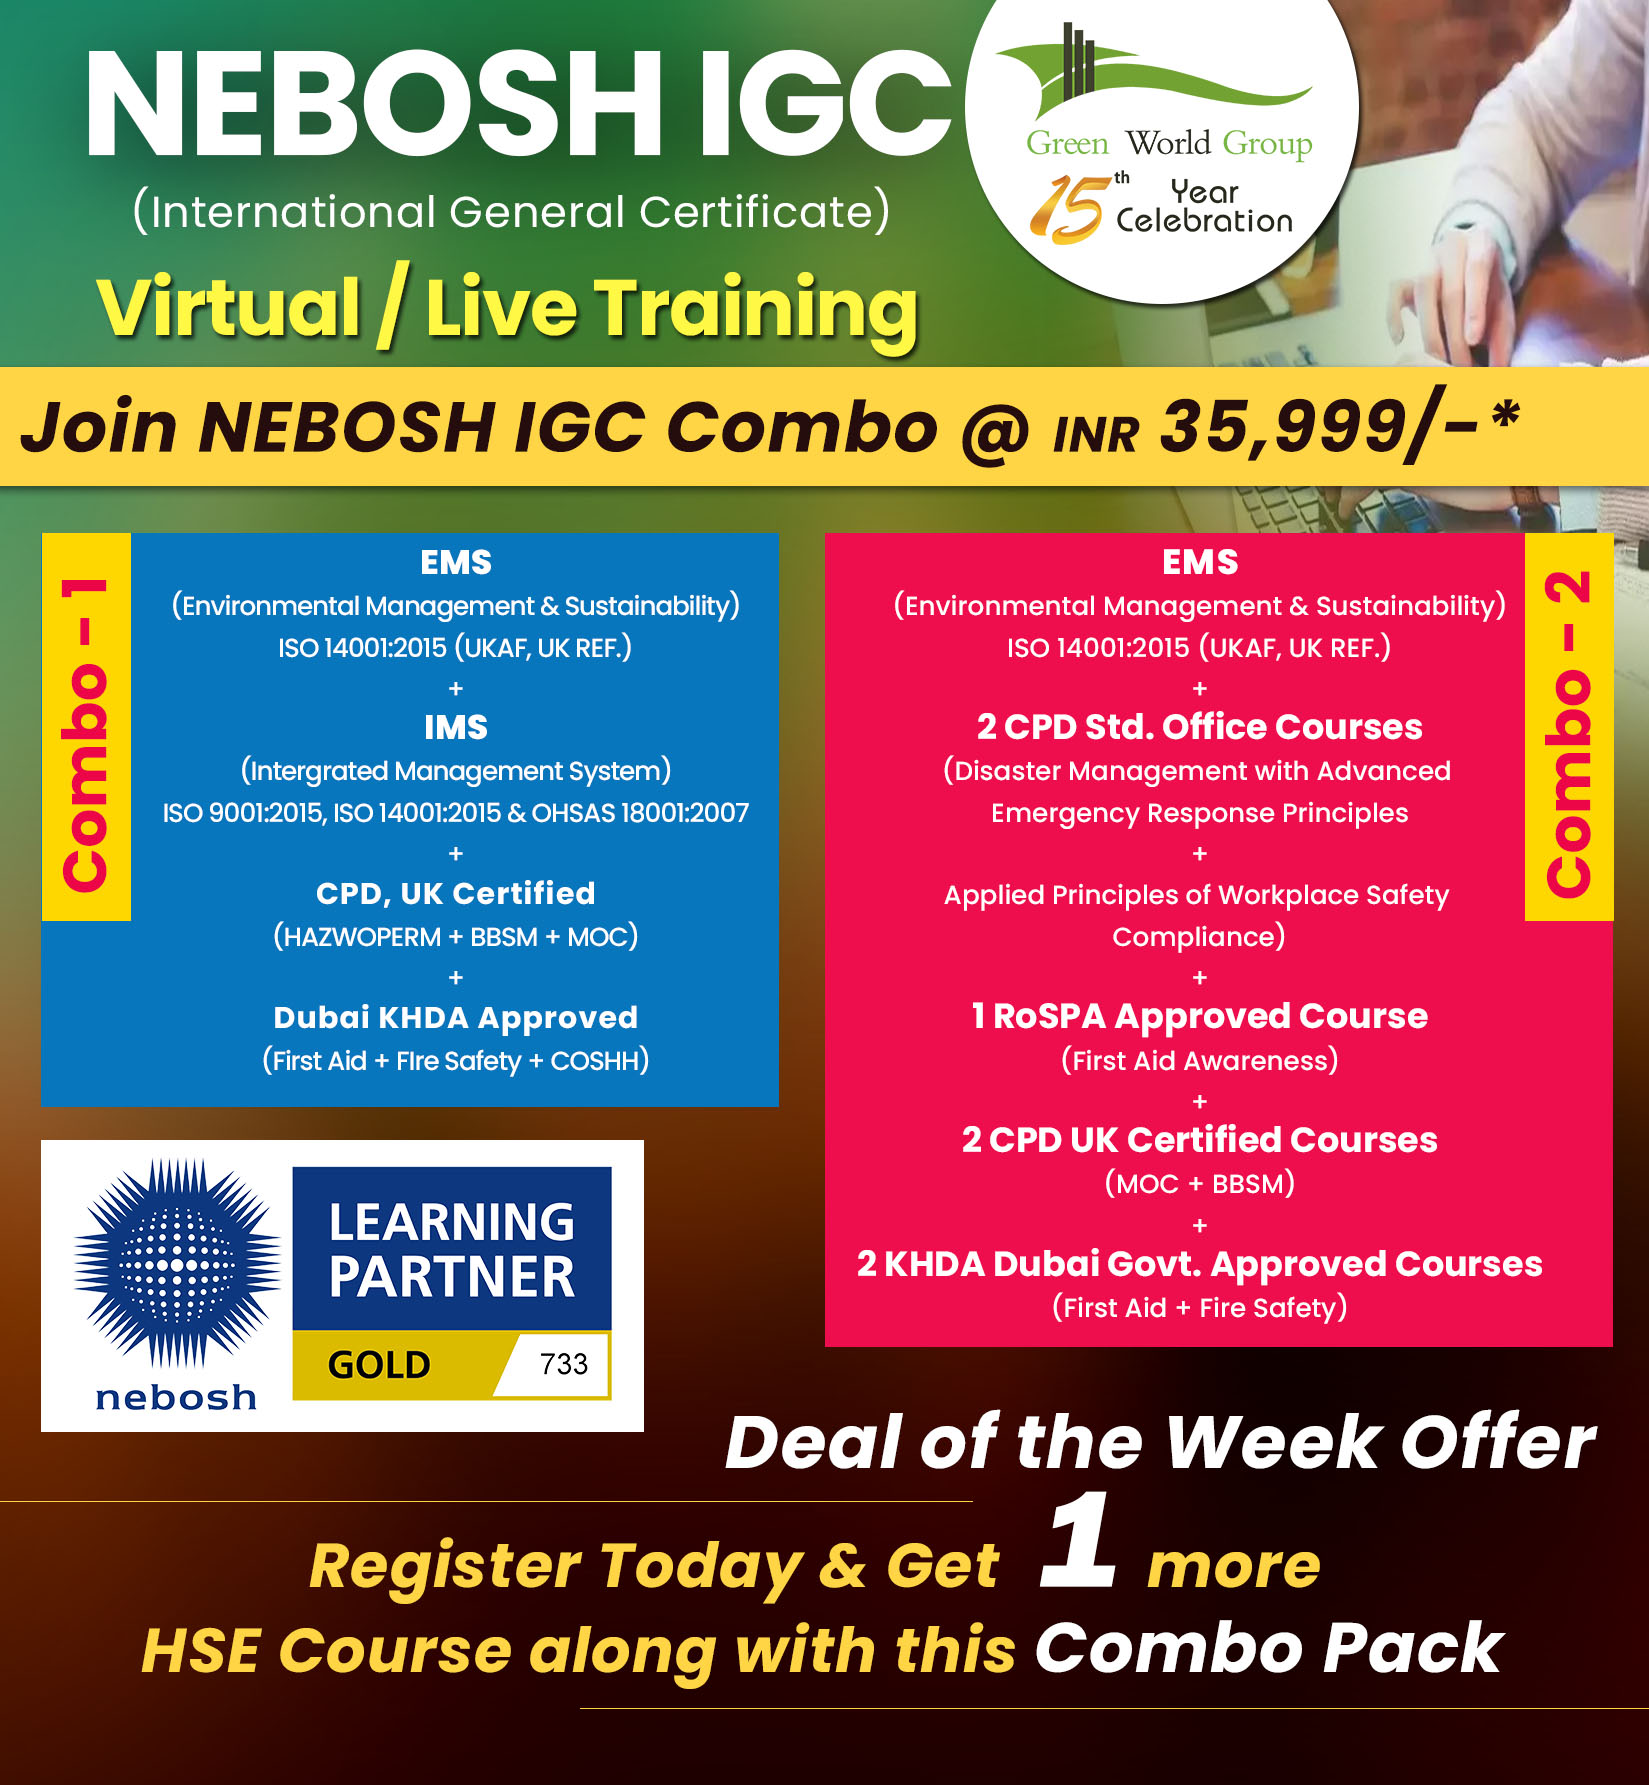 Nebosh_IGC_Offer_India